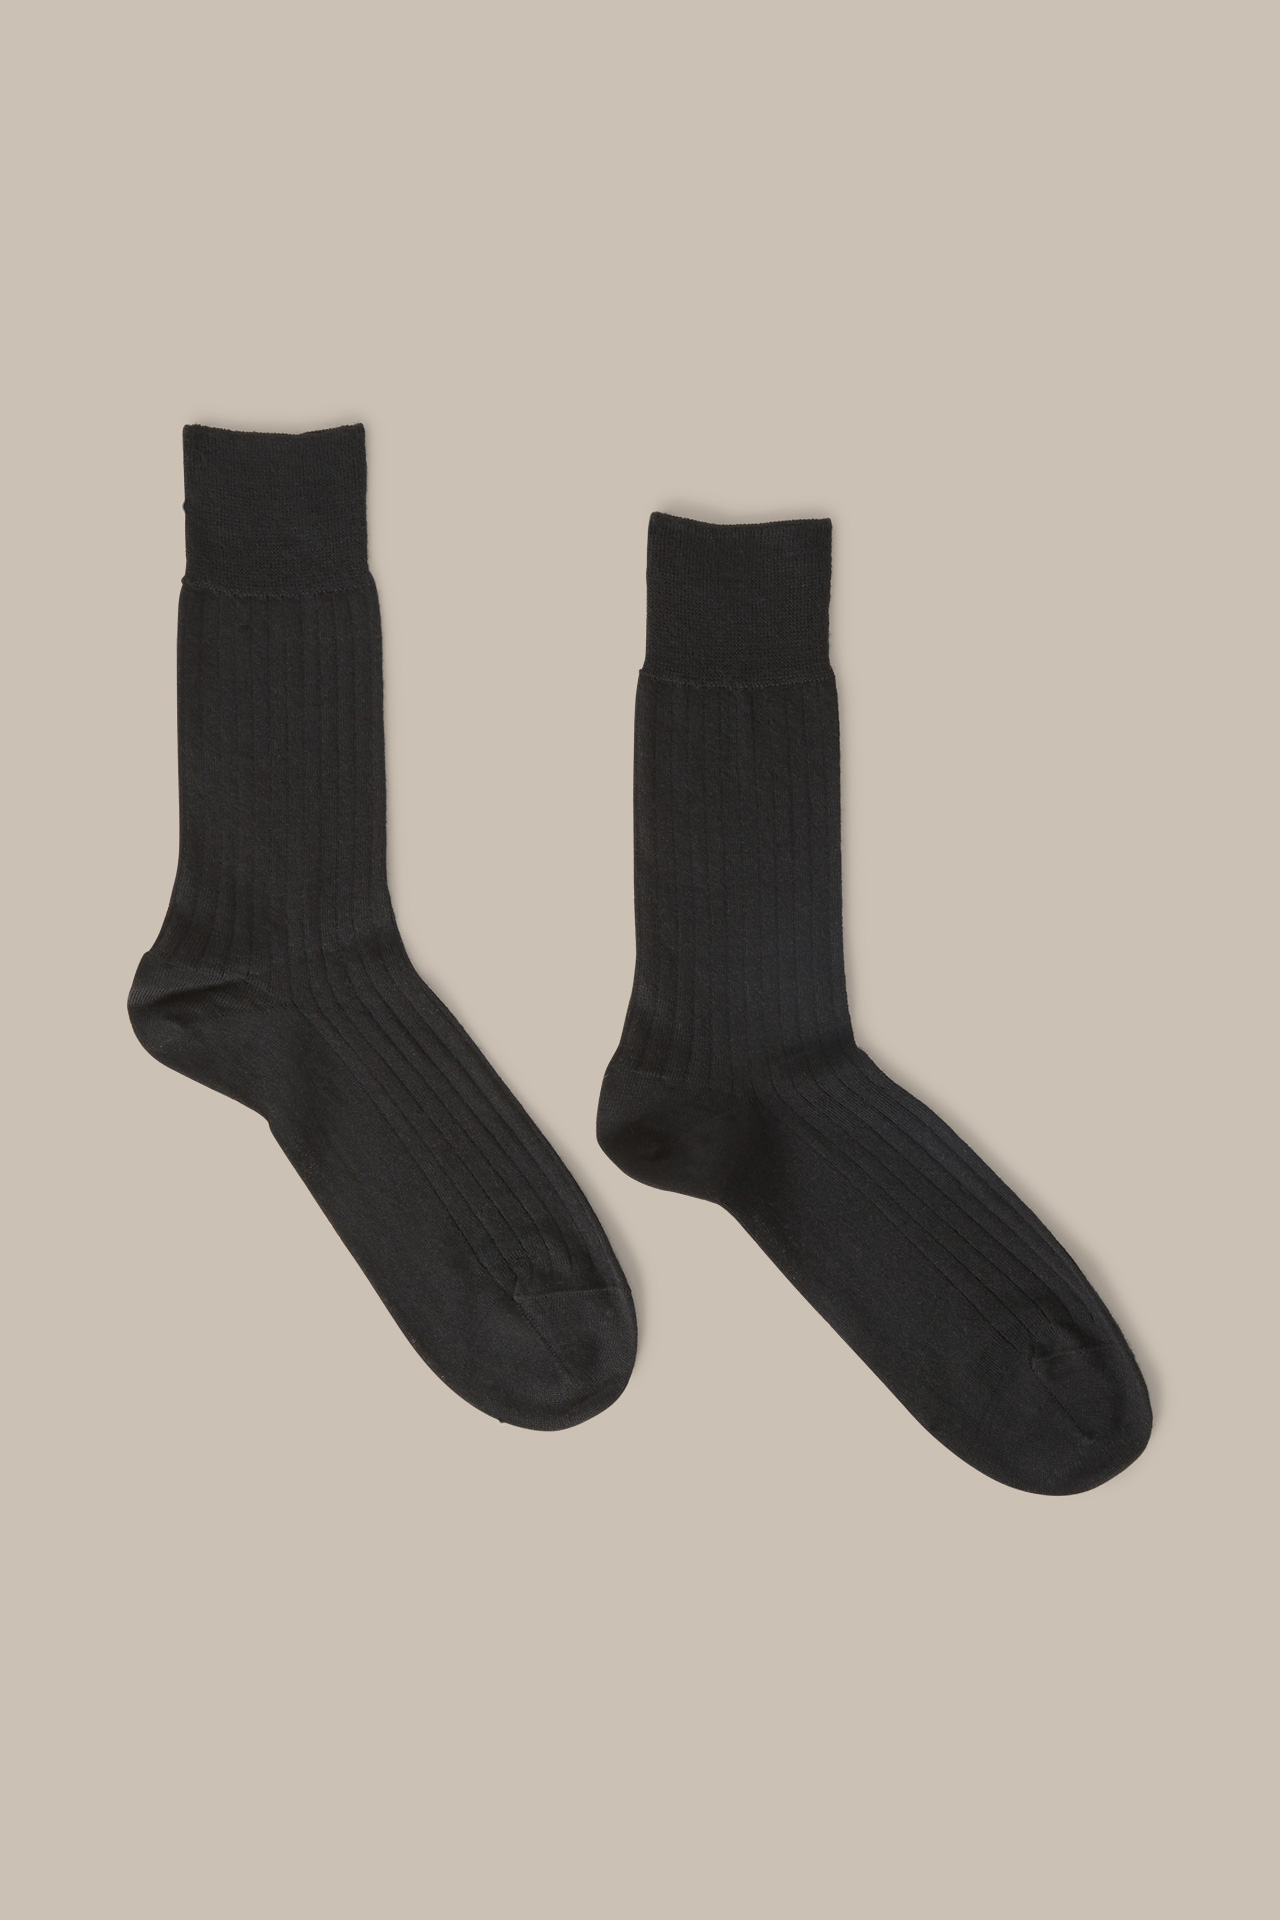 Socken in Schwarz